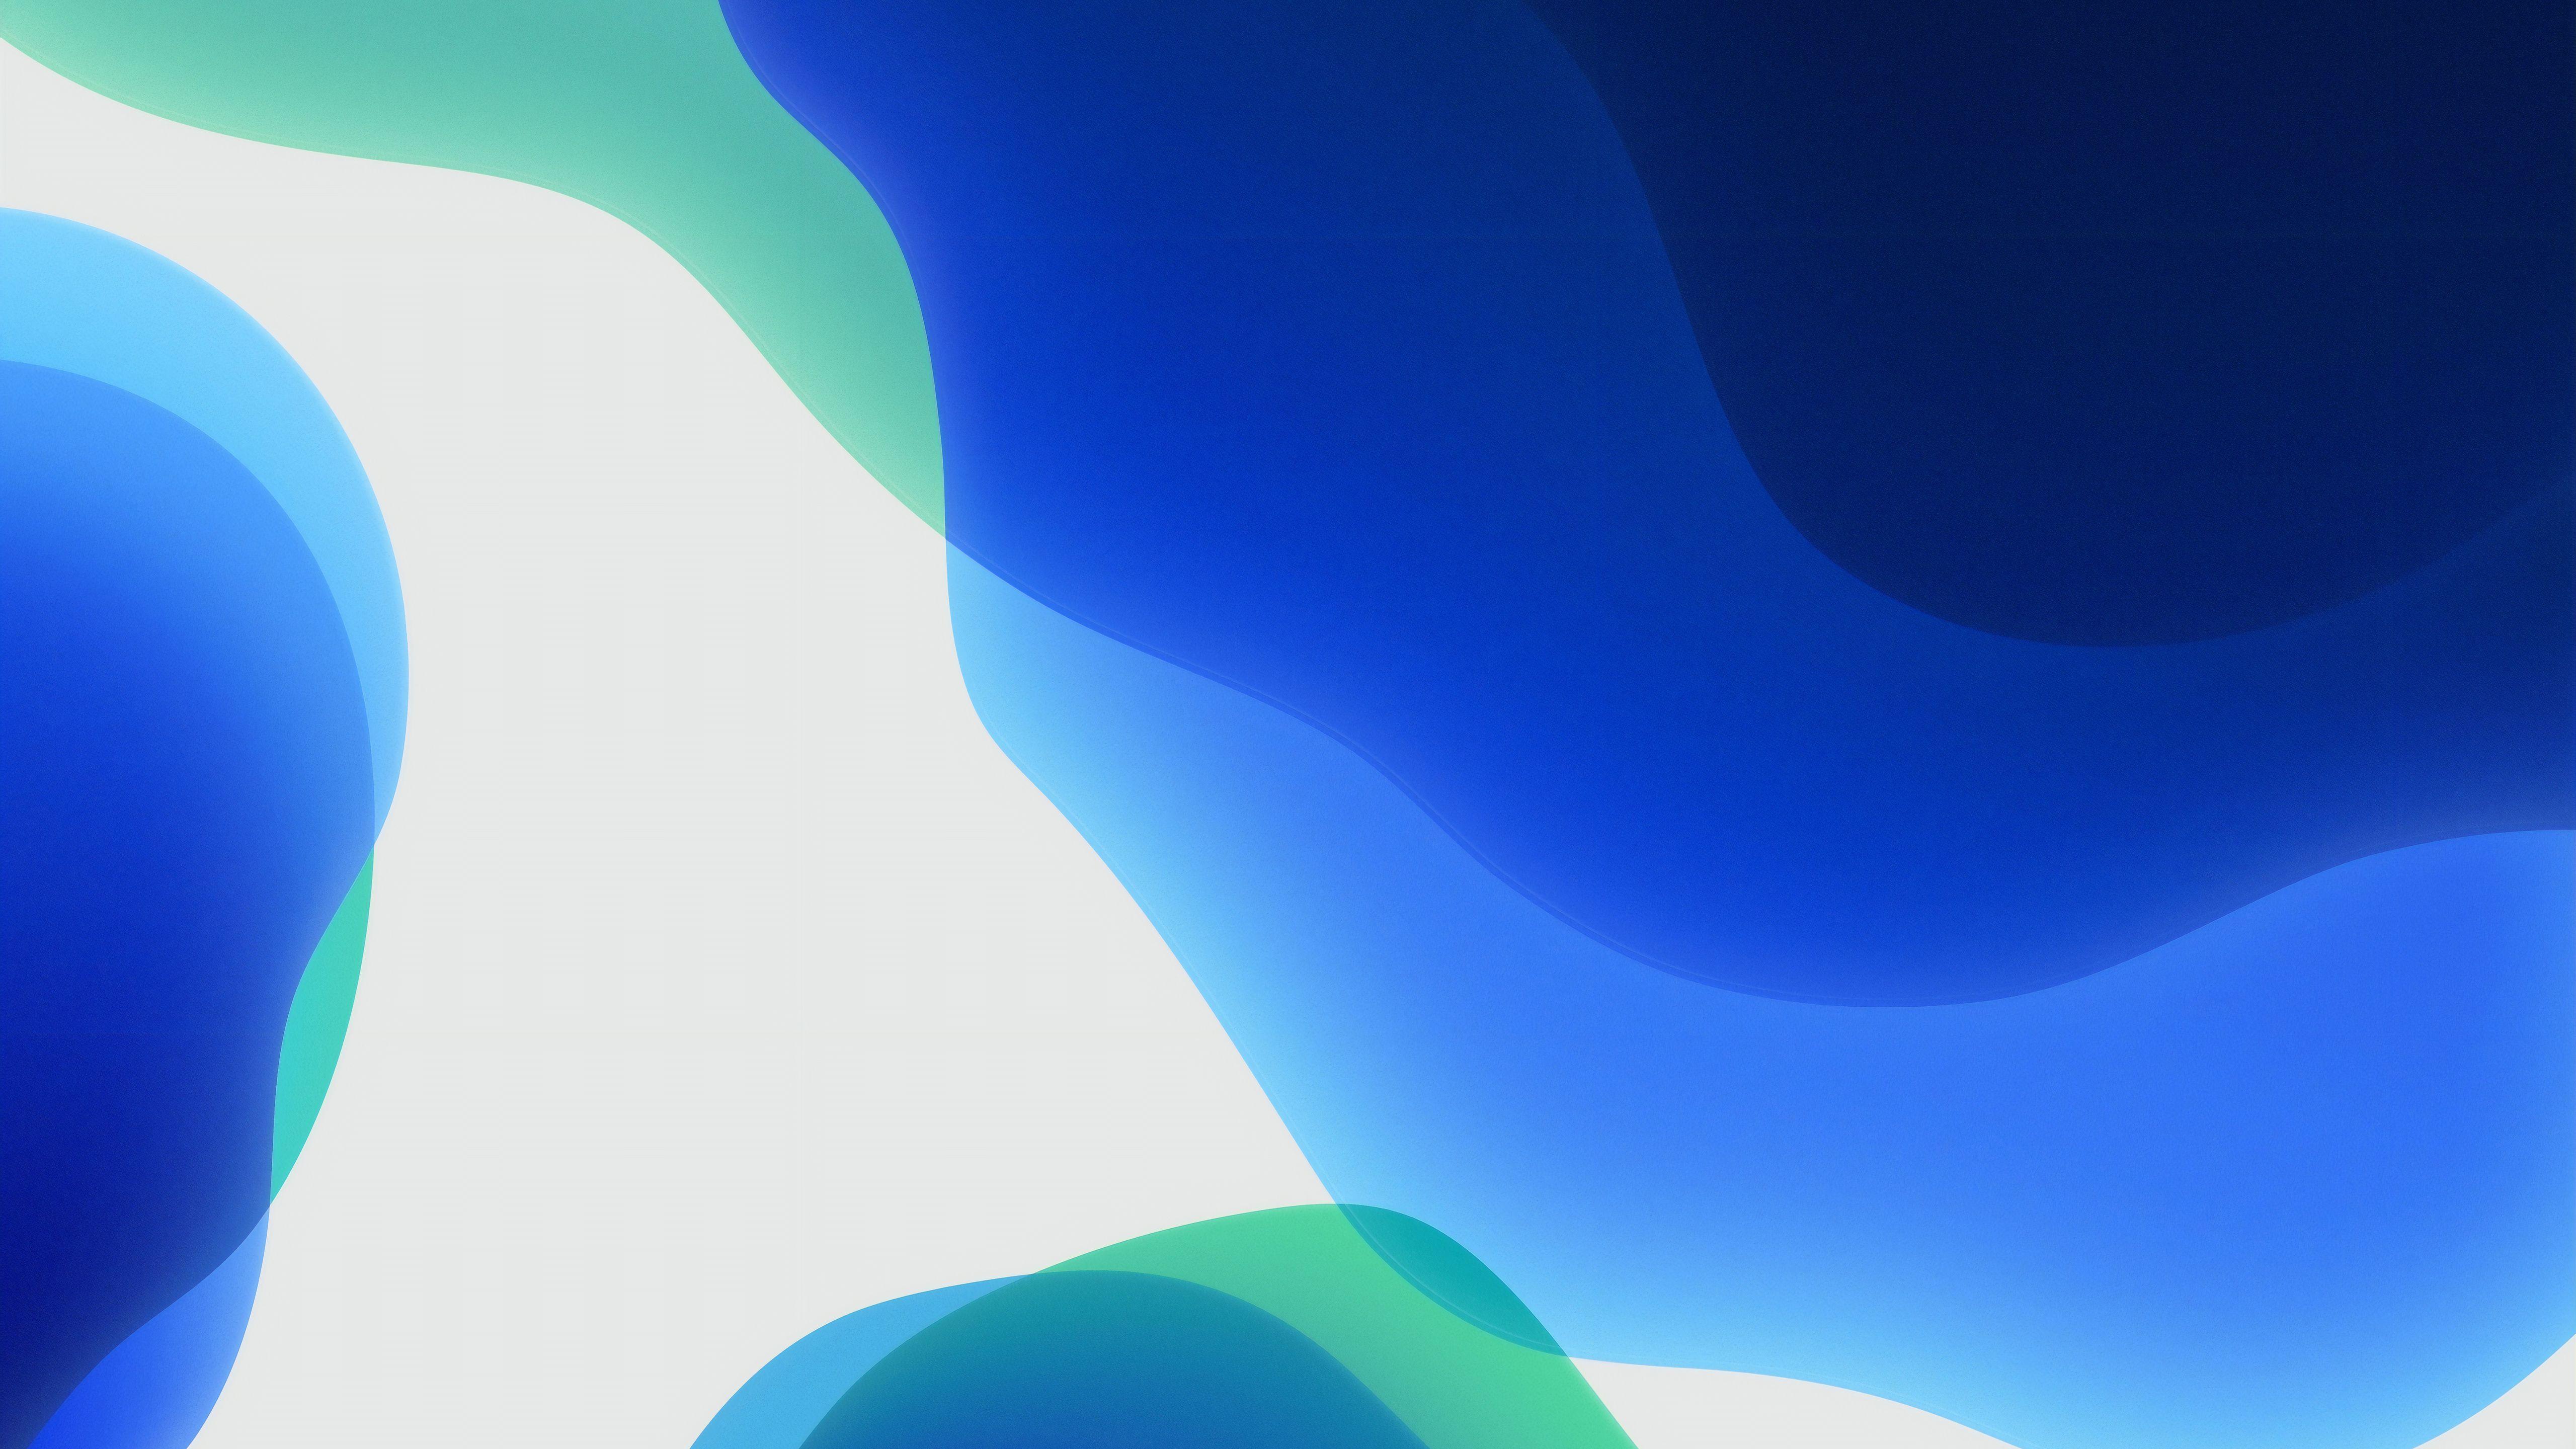 Light Blue 4K Wallpapers - Top Free Light Blue 4K Backgrounds ...